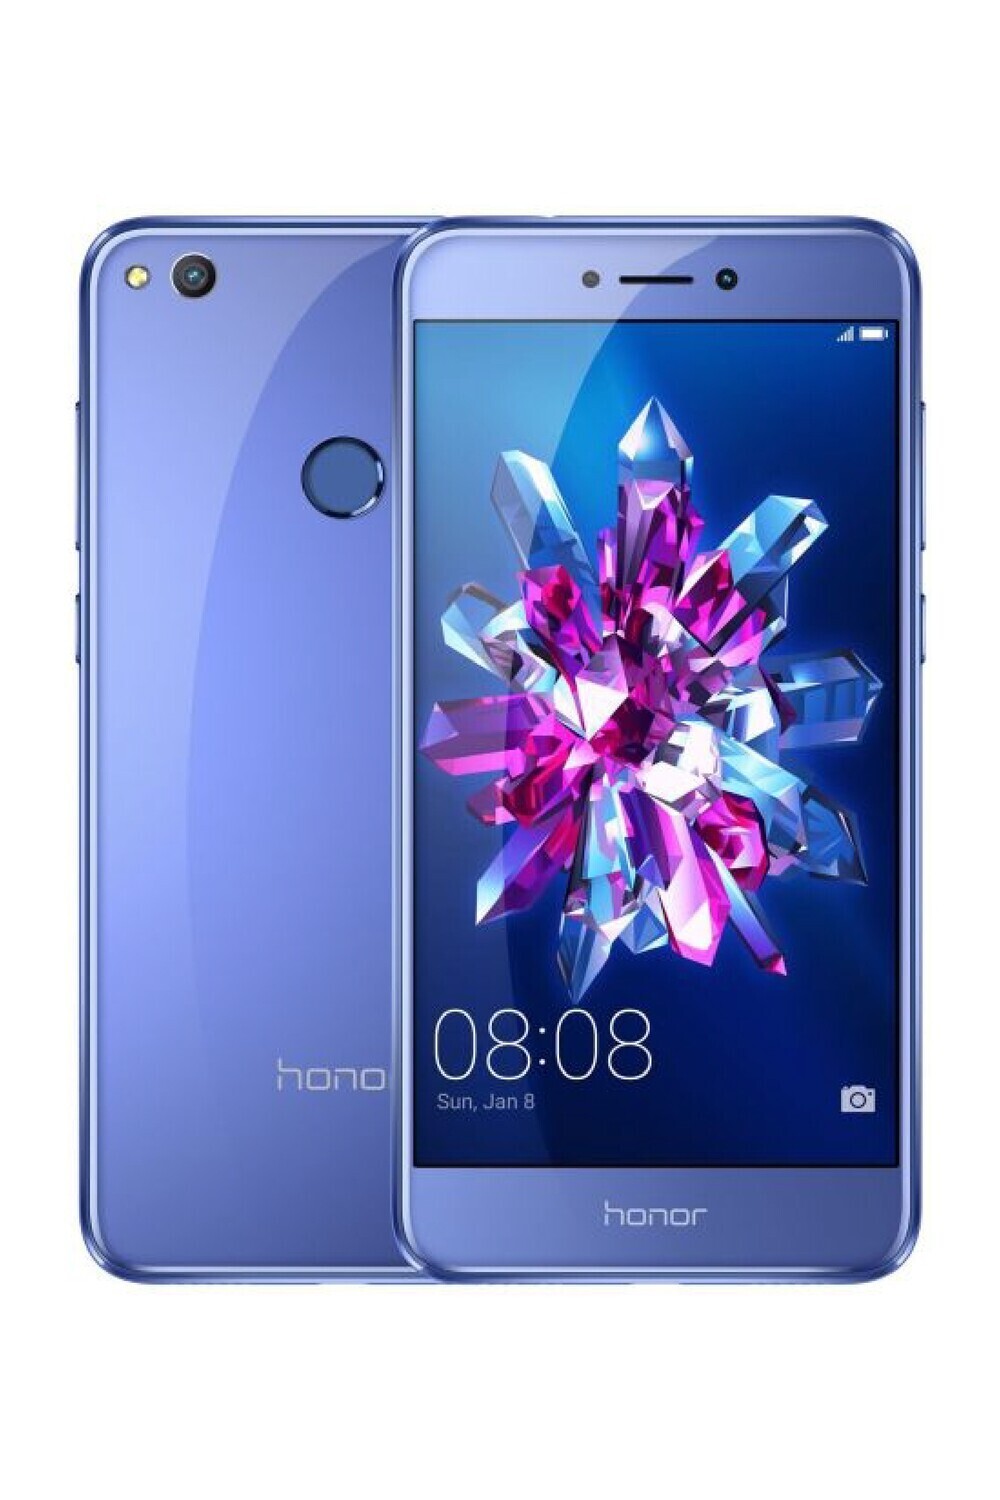 BOXED SEALED Huawei Honor 8 64GB UNLOCKED